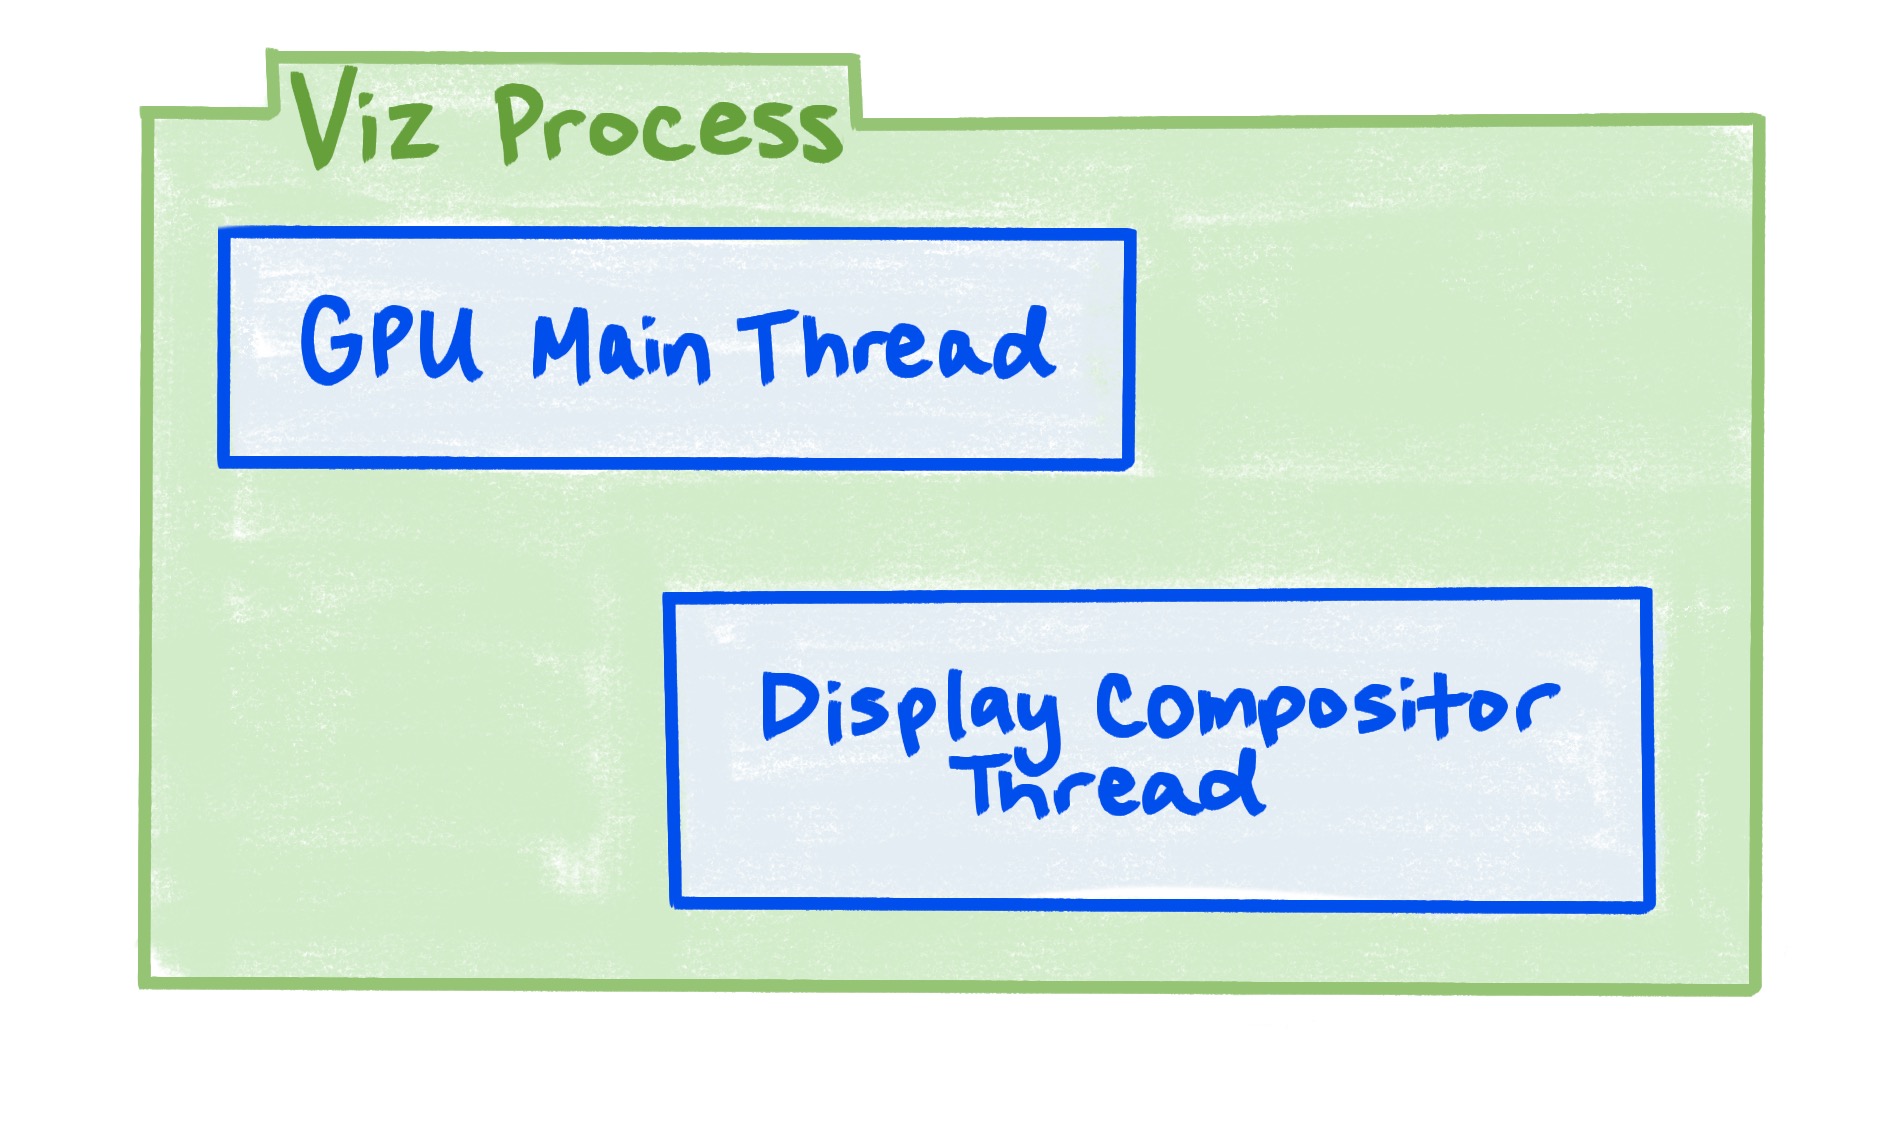 Viz 进程包含 GPU 主线程和显示合成器线程。